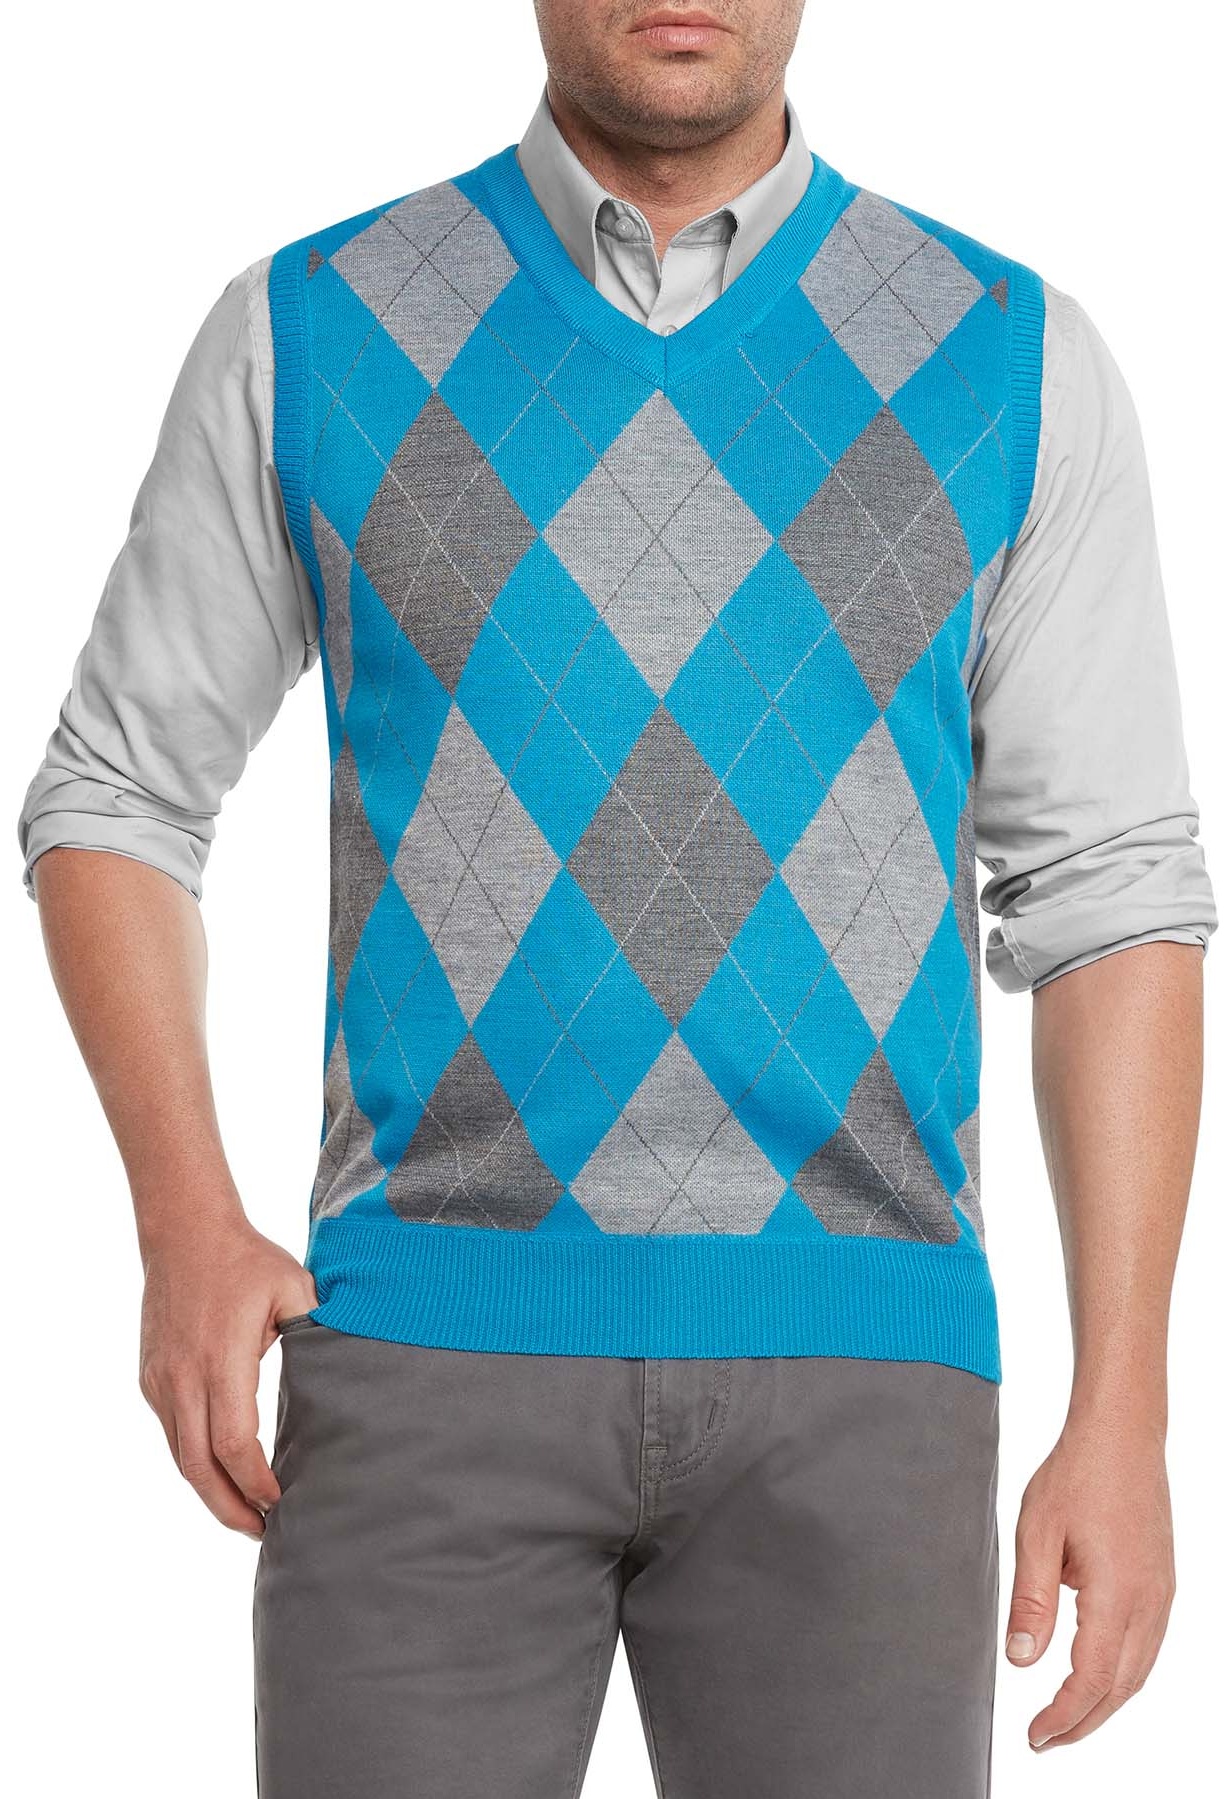 True Rock Men's Argyle V-Neck Sweater Vest (Turquoise/Gray, X-Large) - image 1 of 4